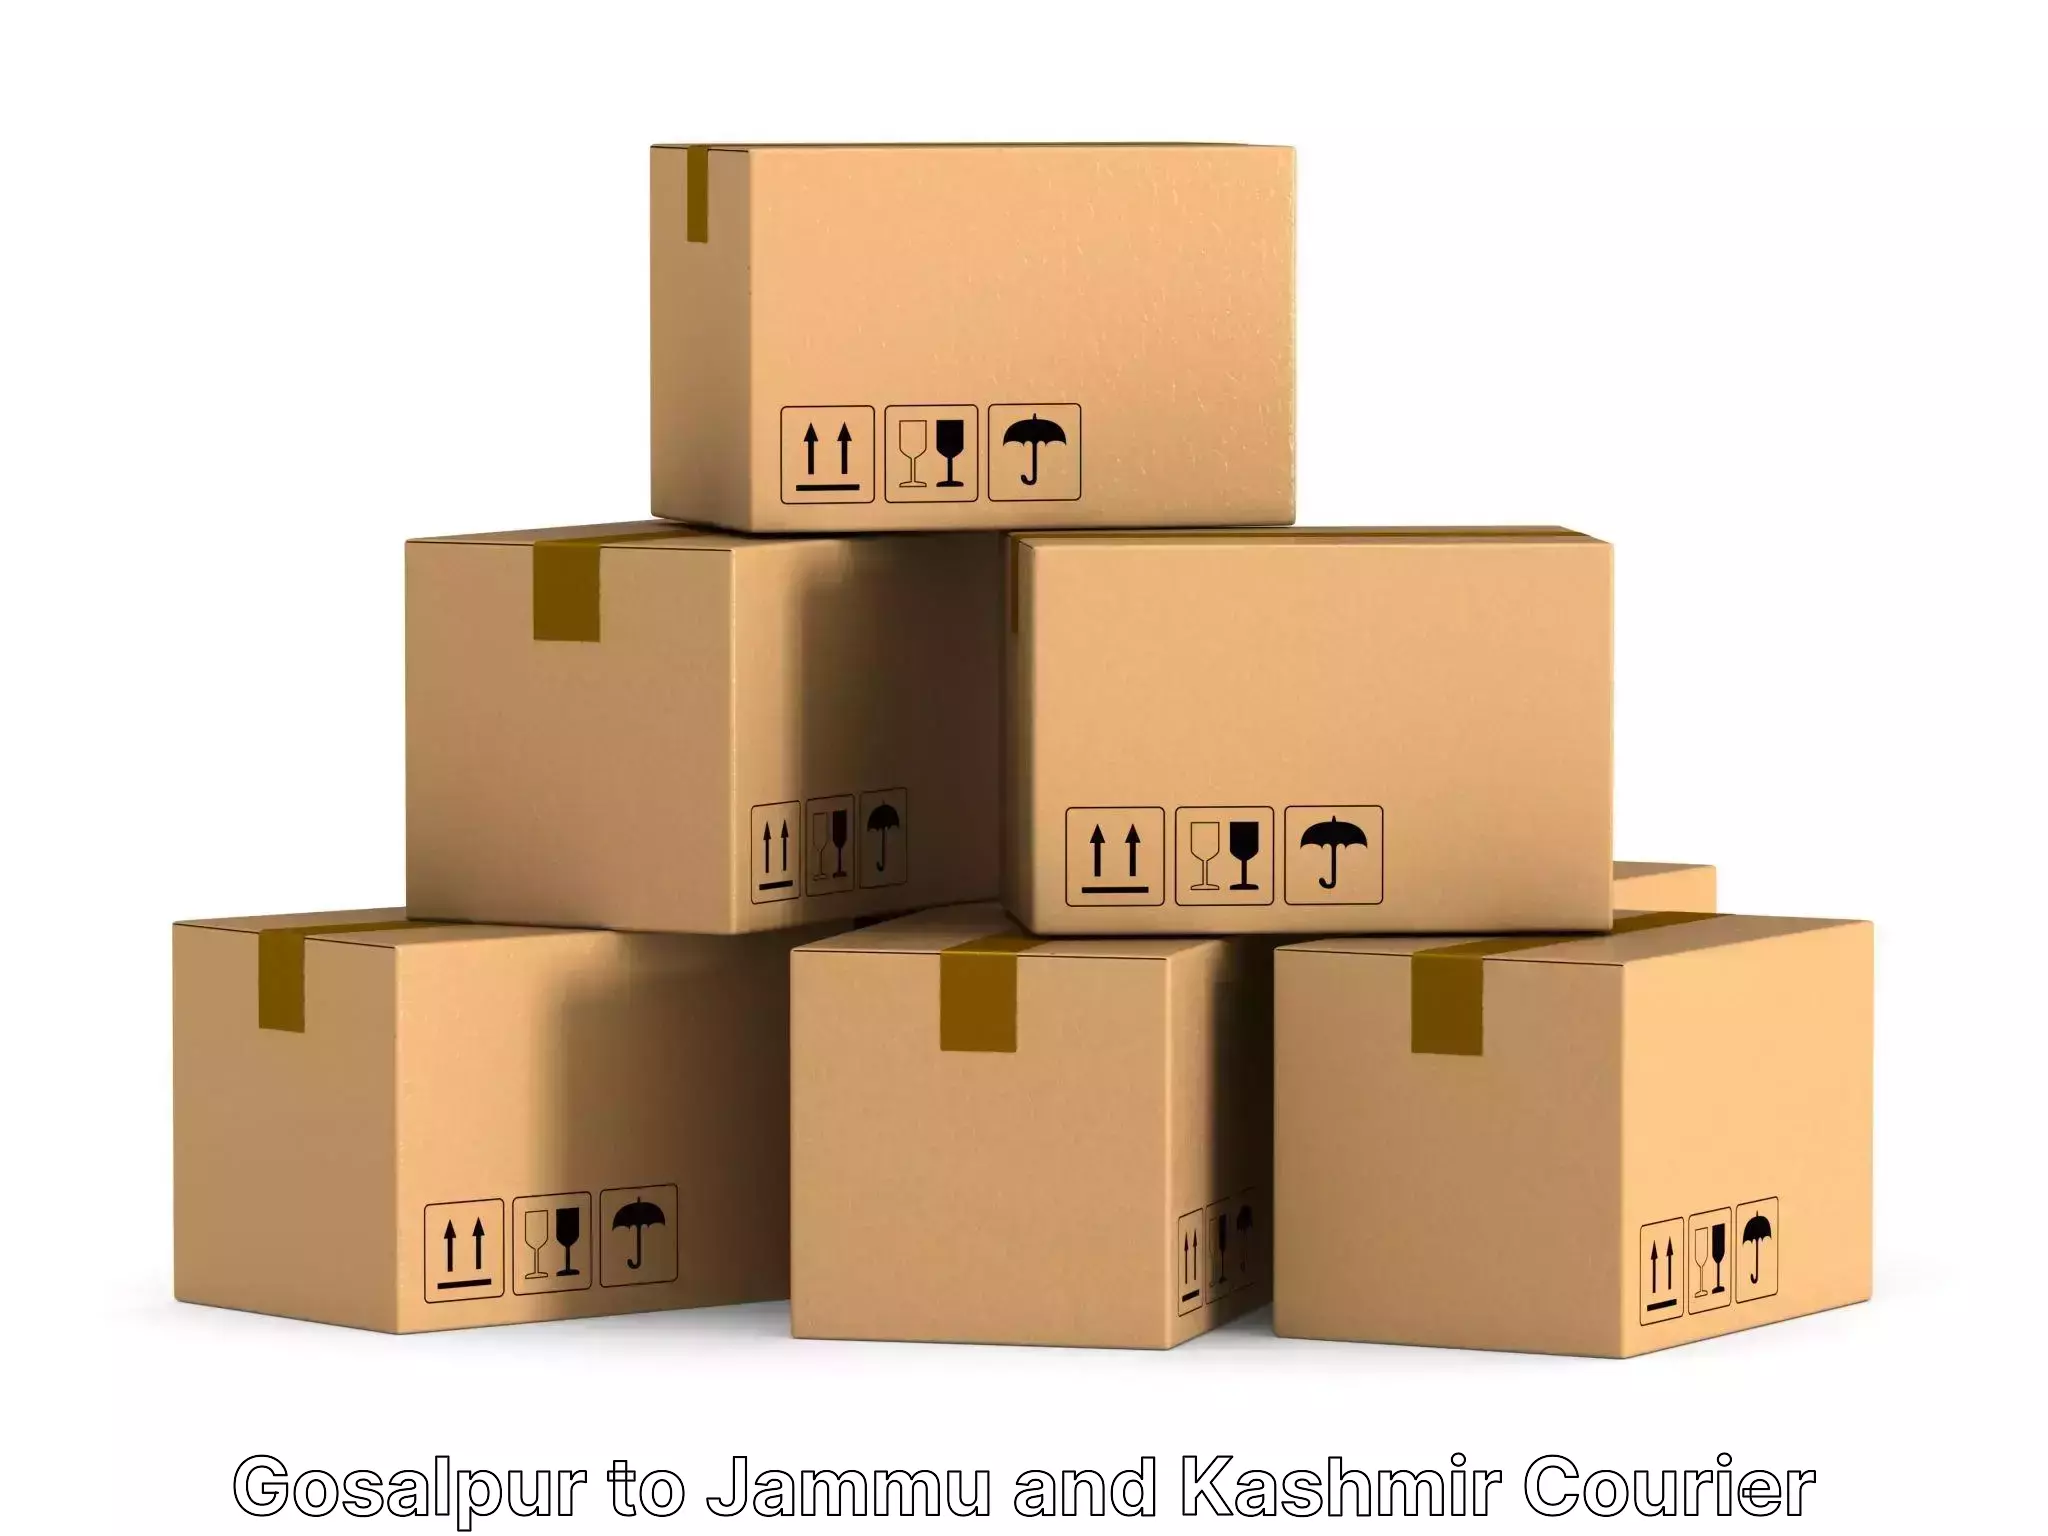 Advanced household movers Gosalpur to Baramulla